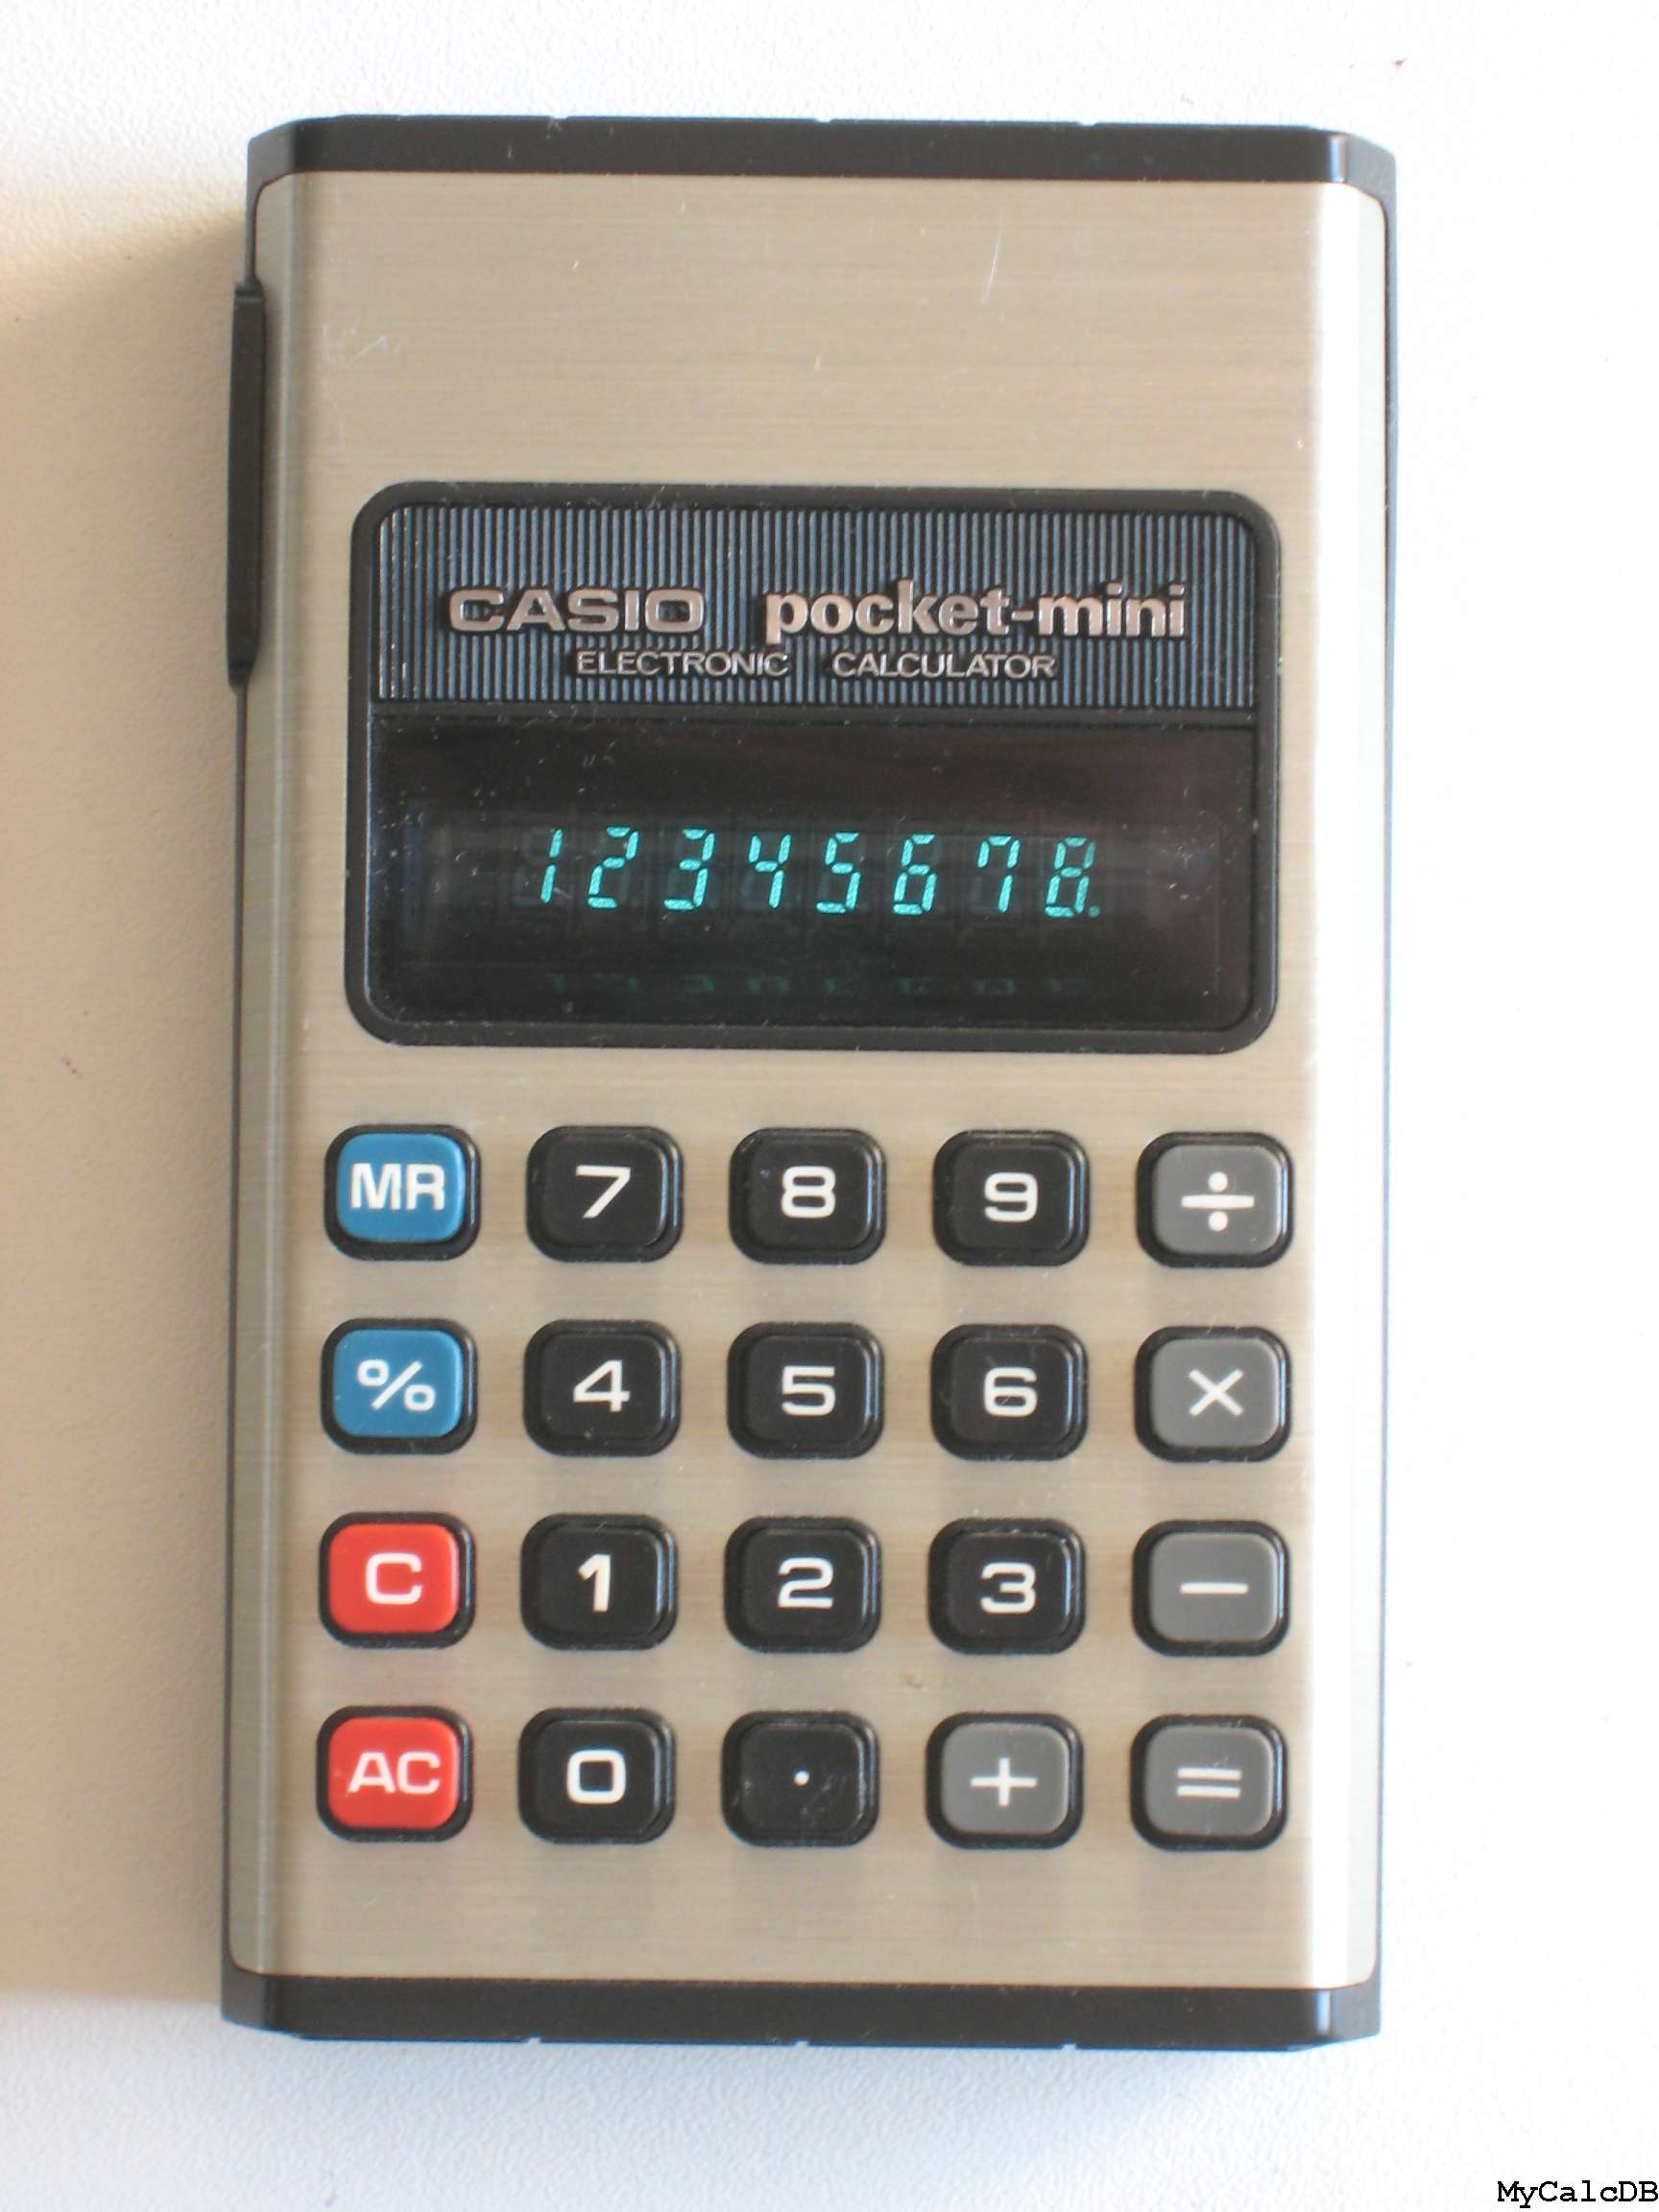 Casio pocket-mini